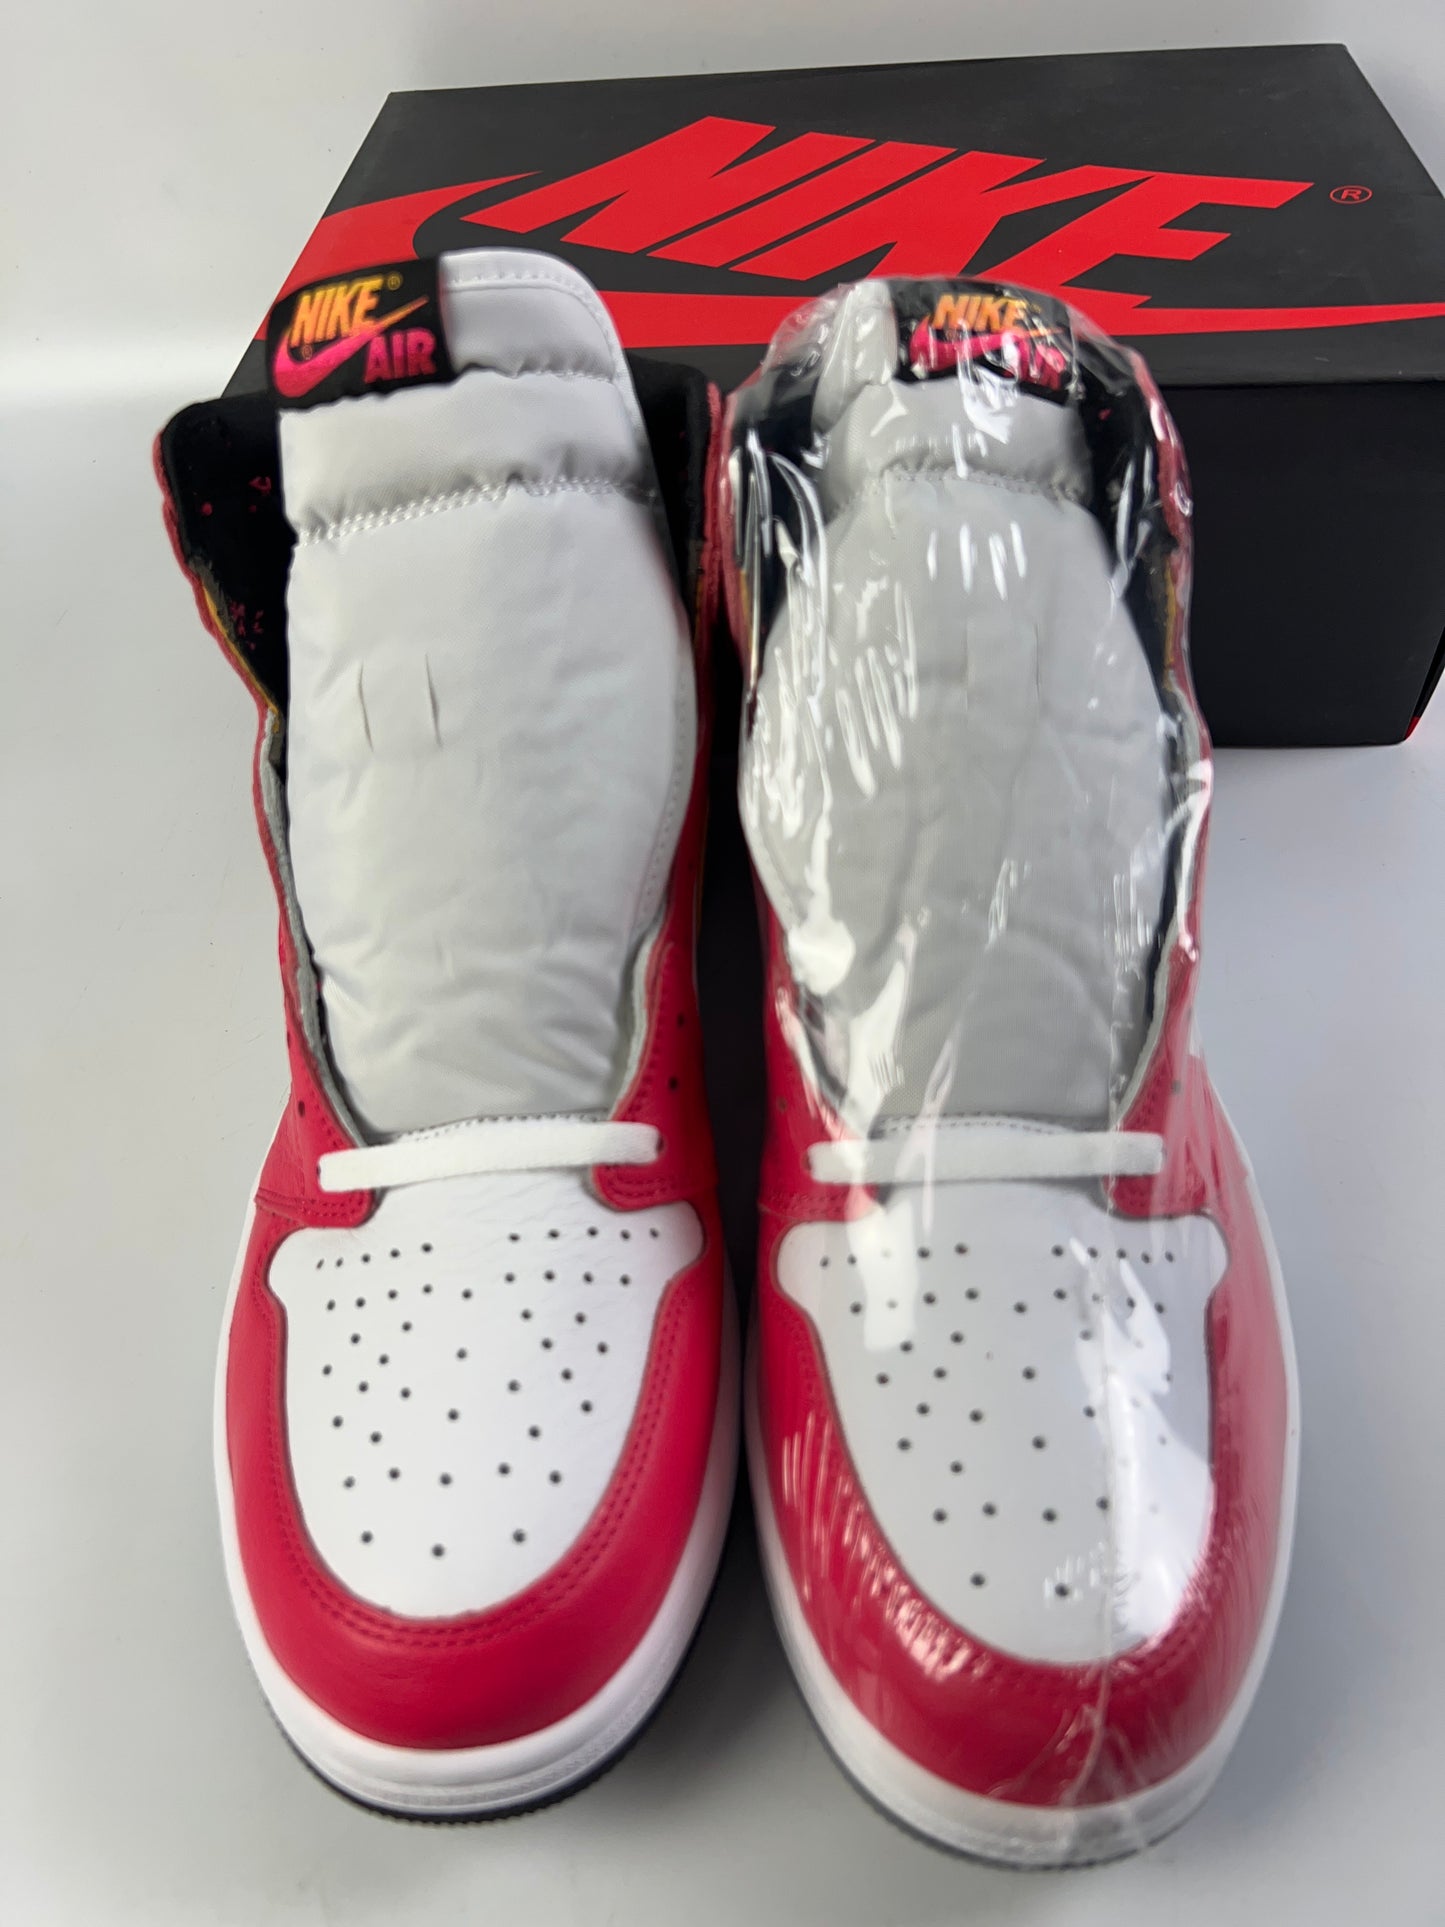 Air Jordan 1 Retro High OG "FUSION RED" 2021 - Size 14 - 555088 603